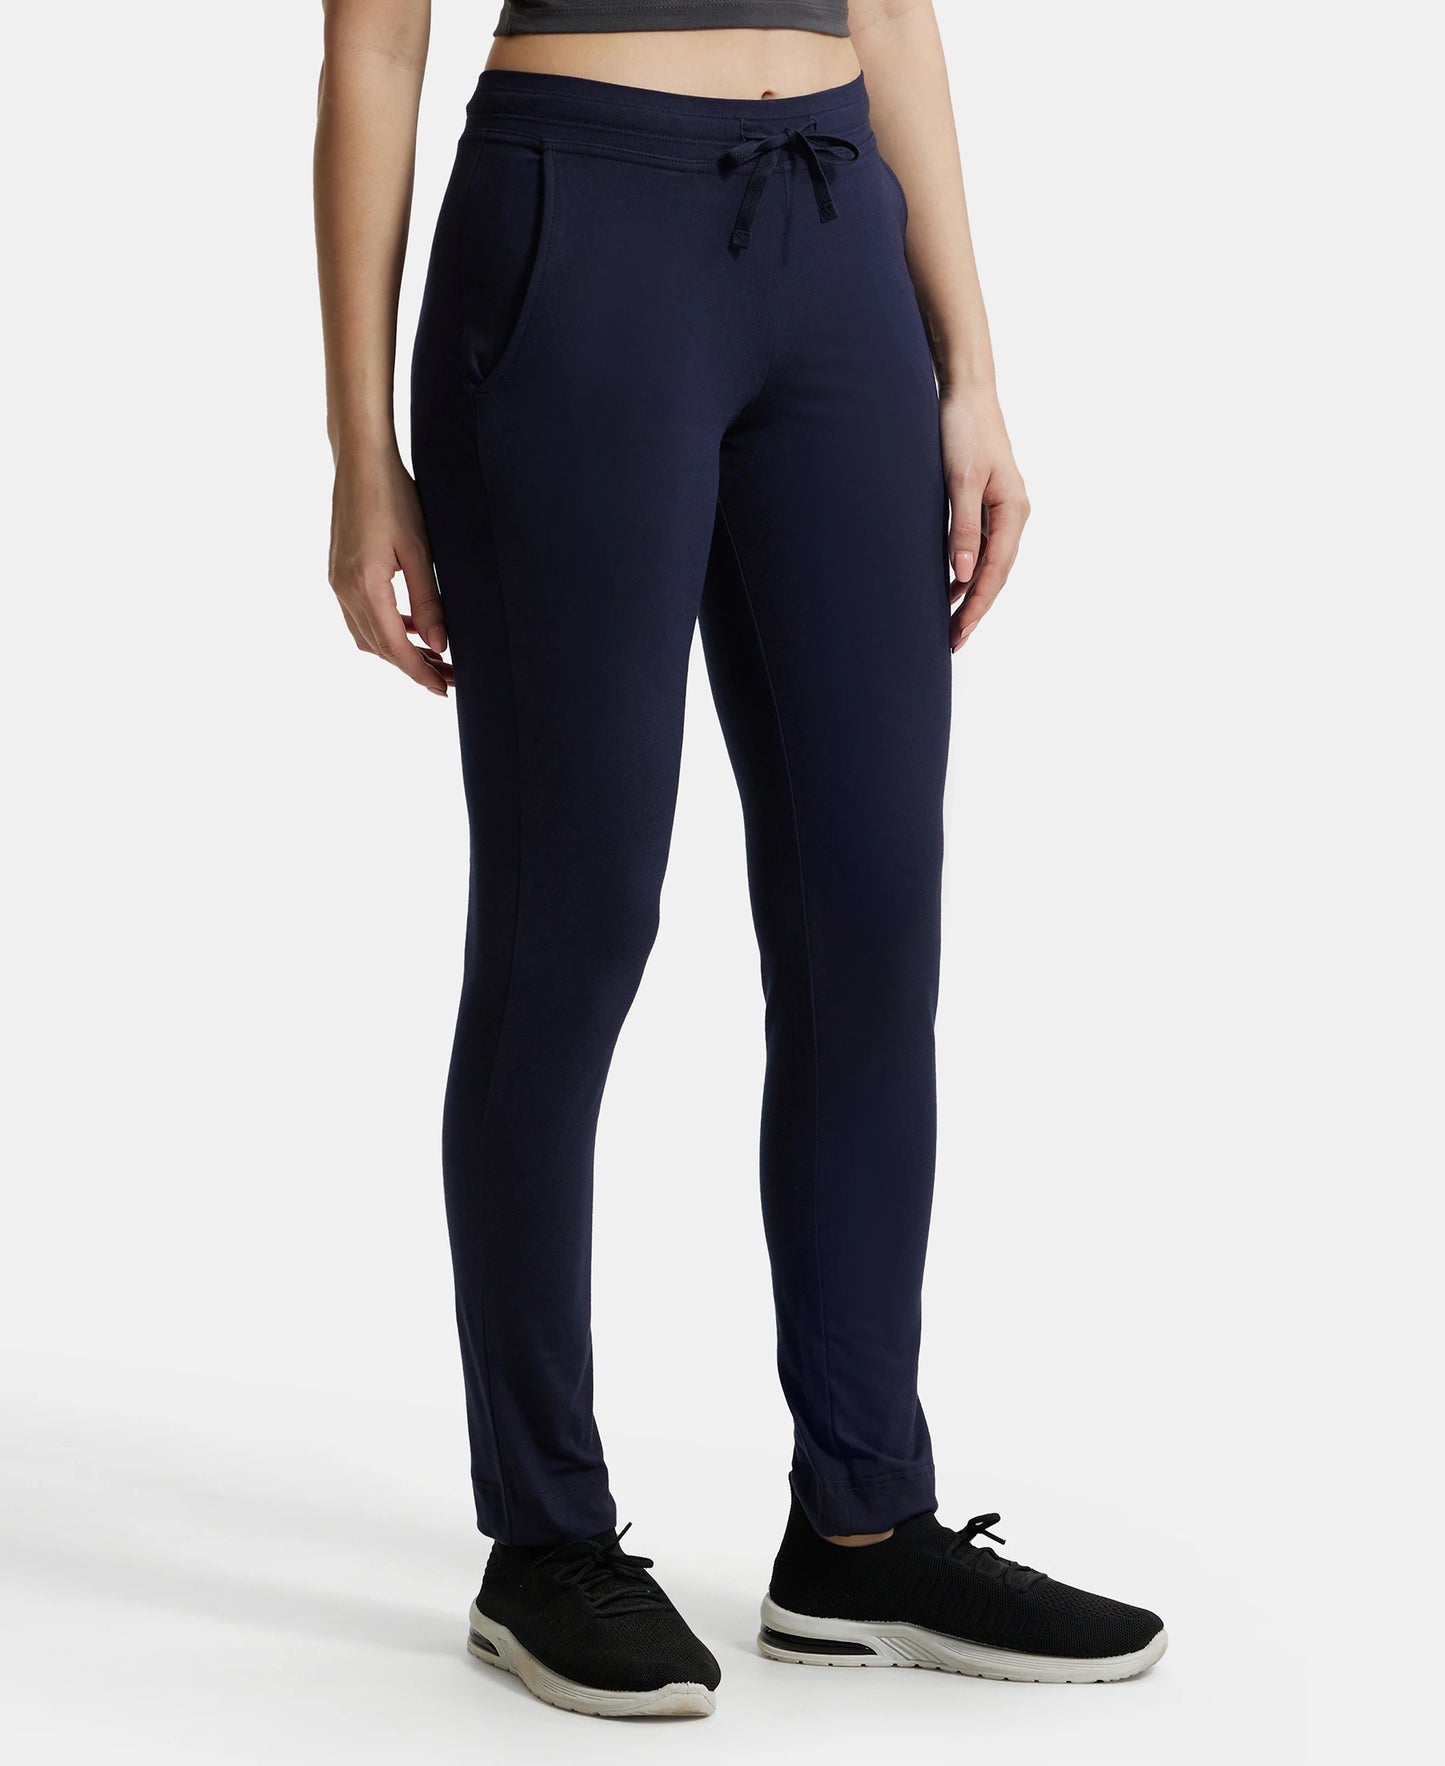 Super Combed Cotton Elastane Slim Fit Trackpants With Side Pockets - Navy Blazer-2